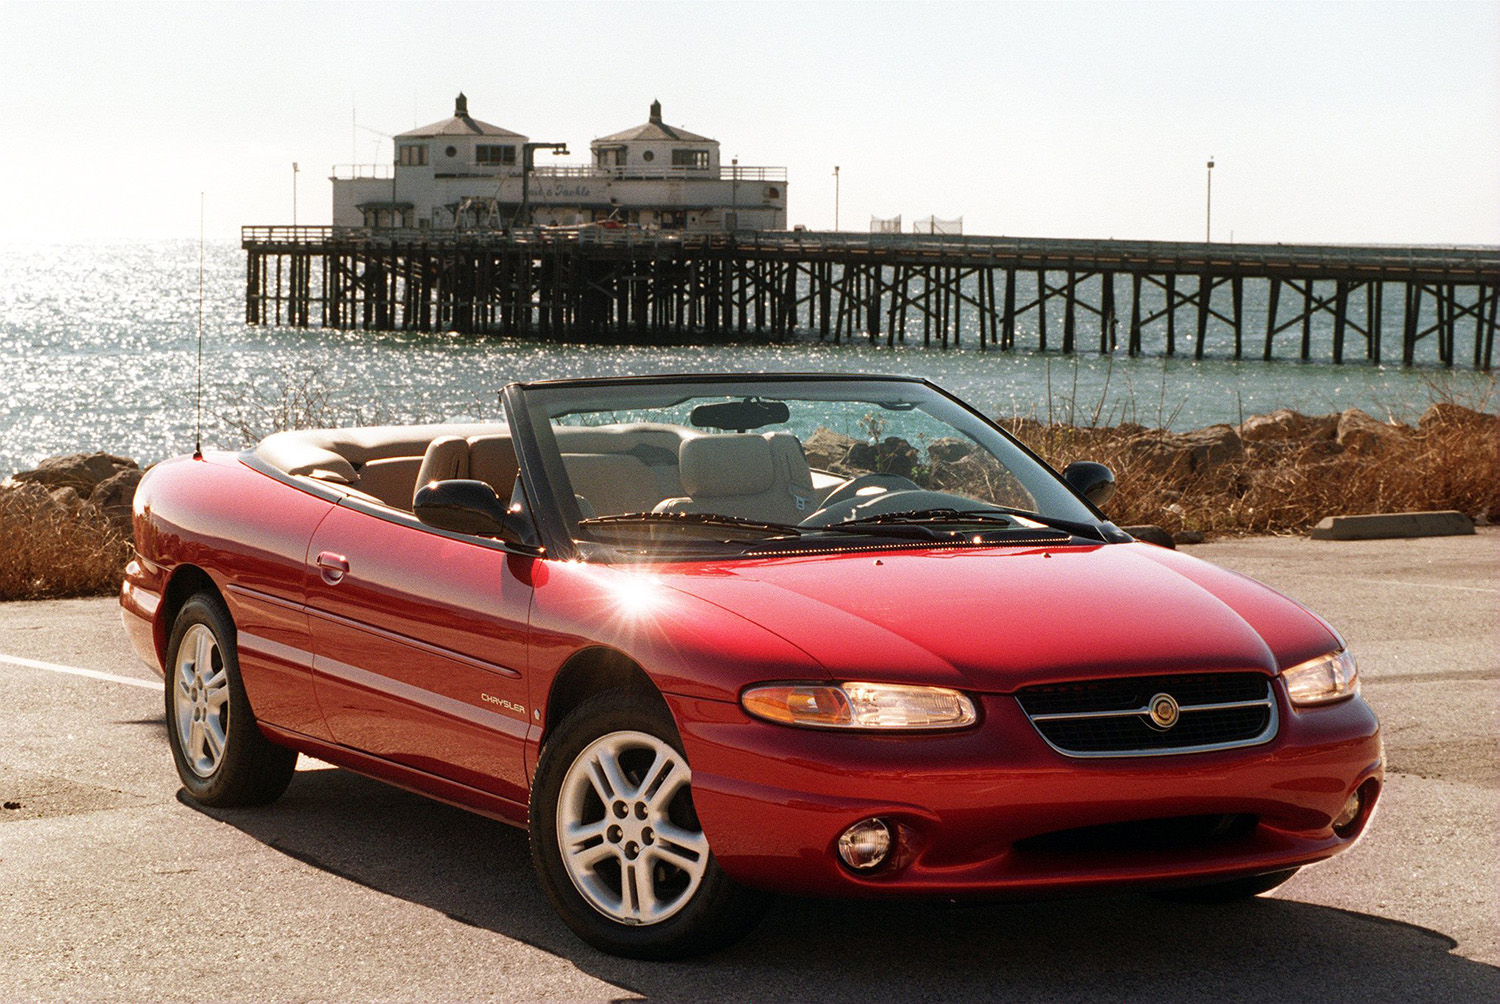 Red 1997 Chrysler Sebring Convertible front end photograph at Malibu Pier